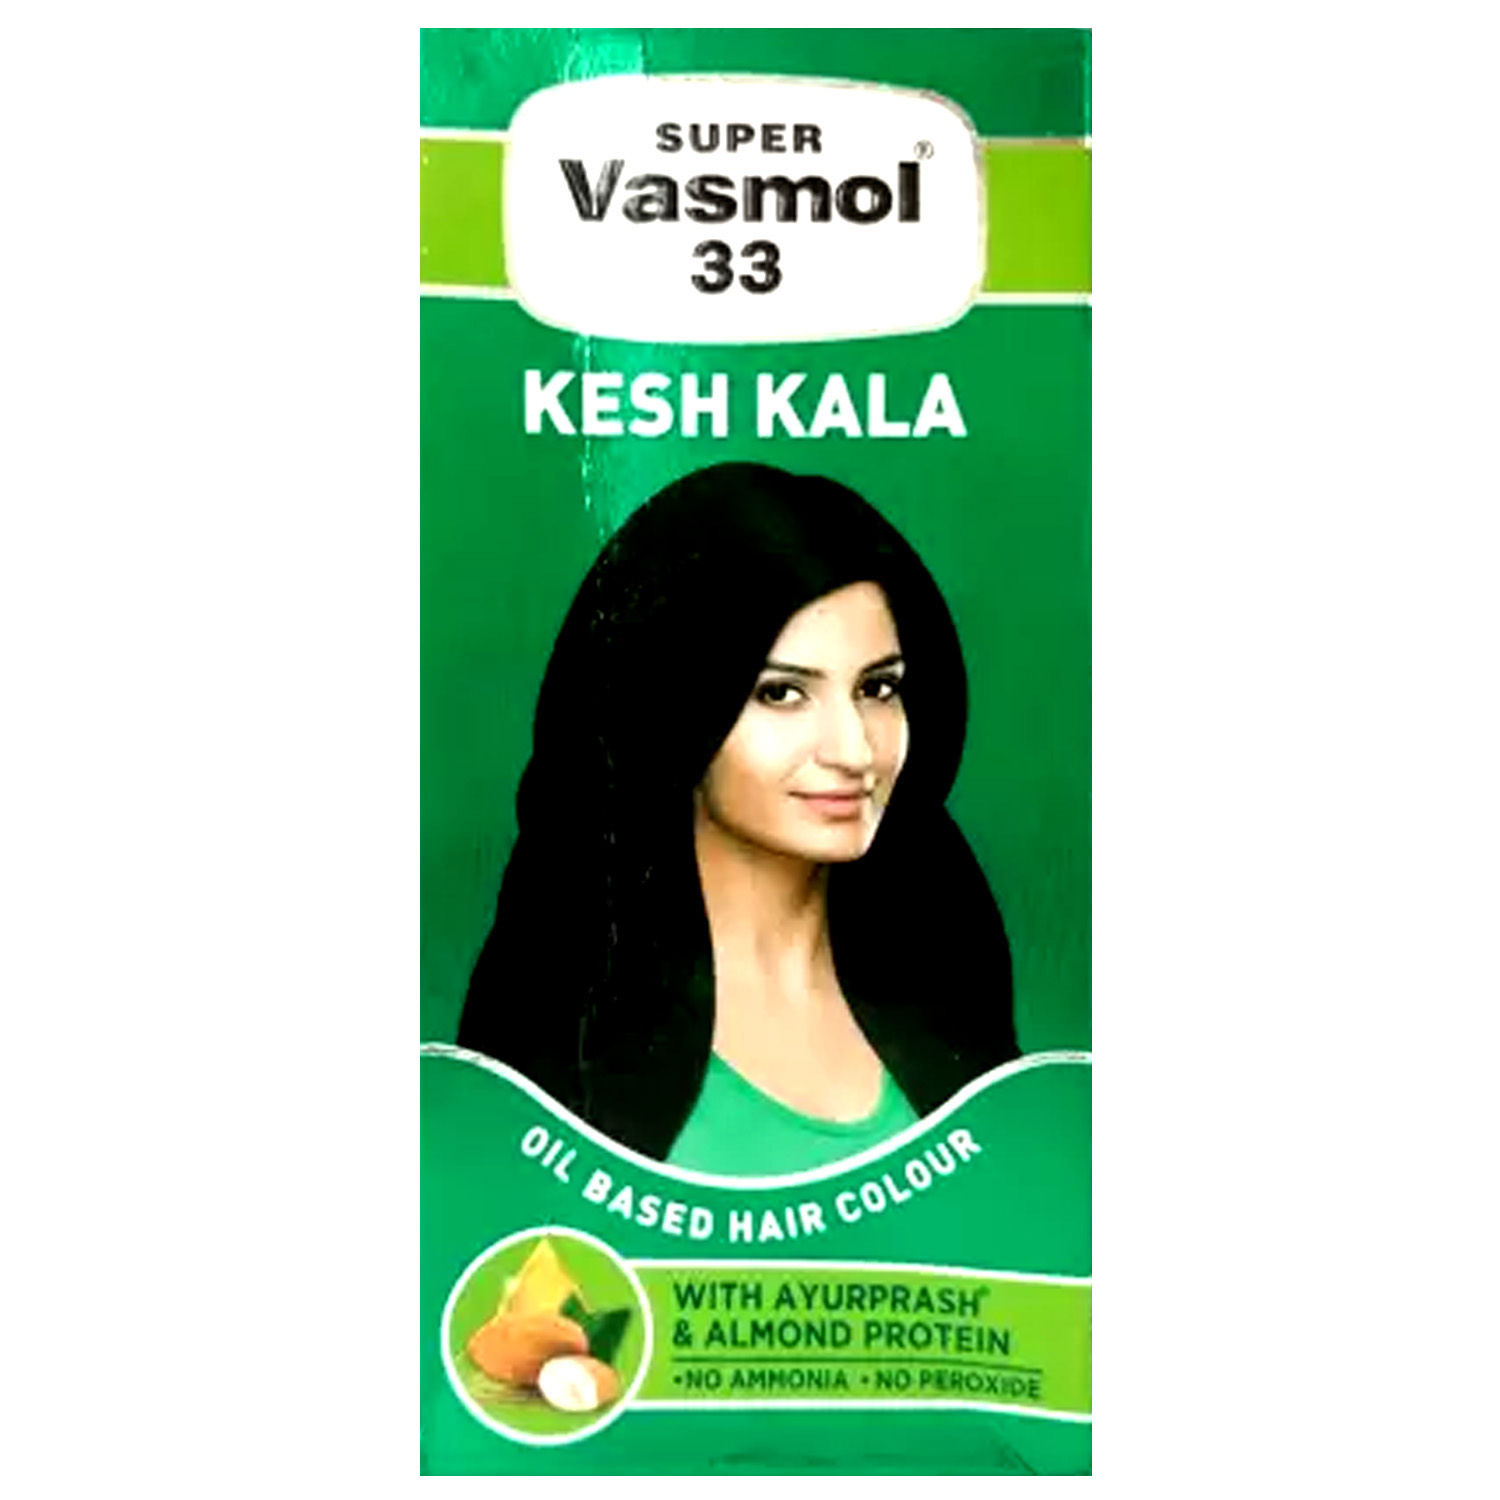 Super Vasmol 33 Kesh Kala Oil Based Hair Color 100ml  A1 Indian Grocery  Online